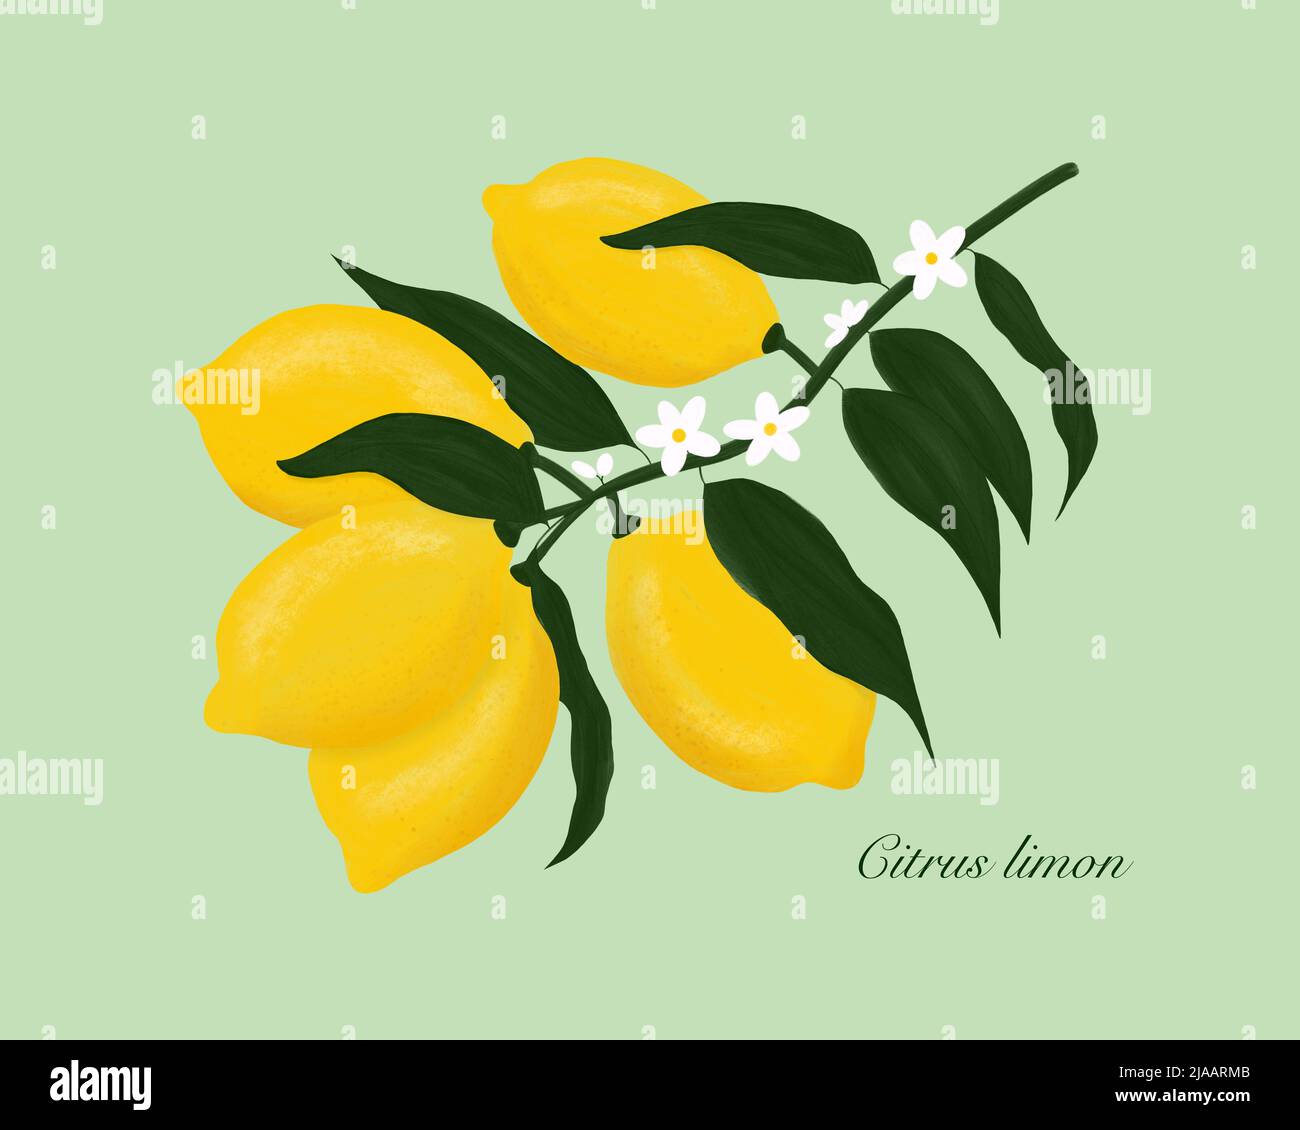 Lemon. Citrus limon. Yellow lemons on lemon tree branch with blossoms and dark green leaves. Hand-drawn painting. Botanical gouache illustration. Stock Photo